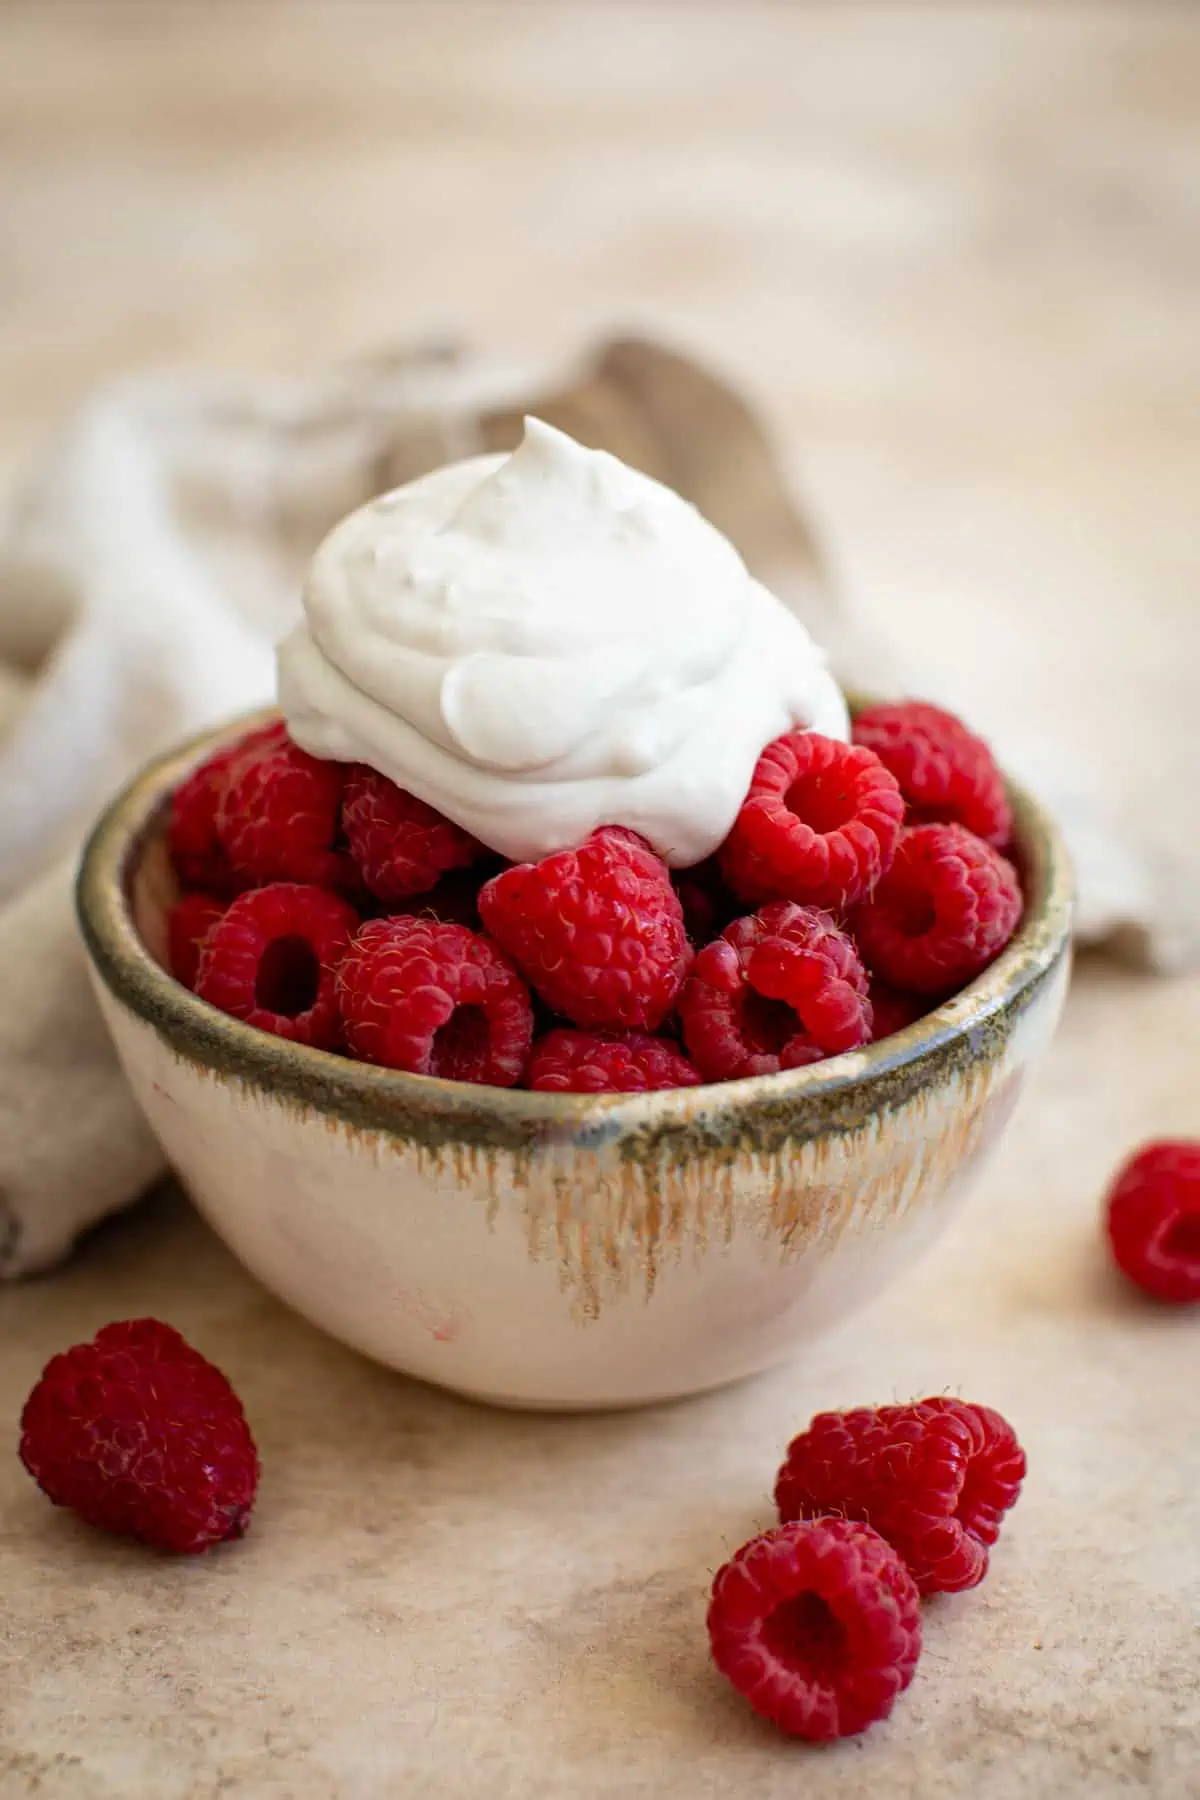 Vegan whipped cream on top of raspberries.